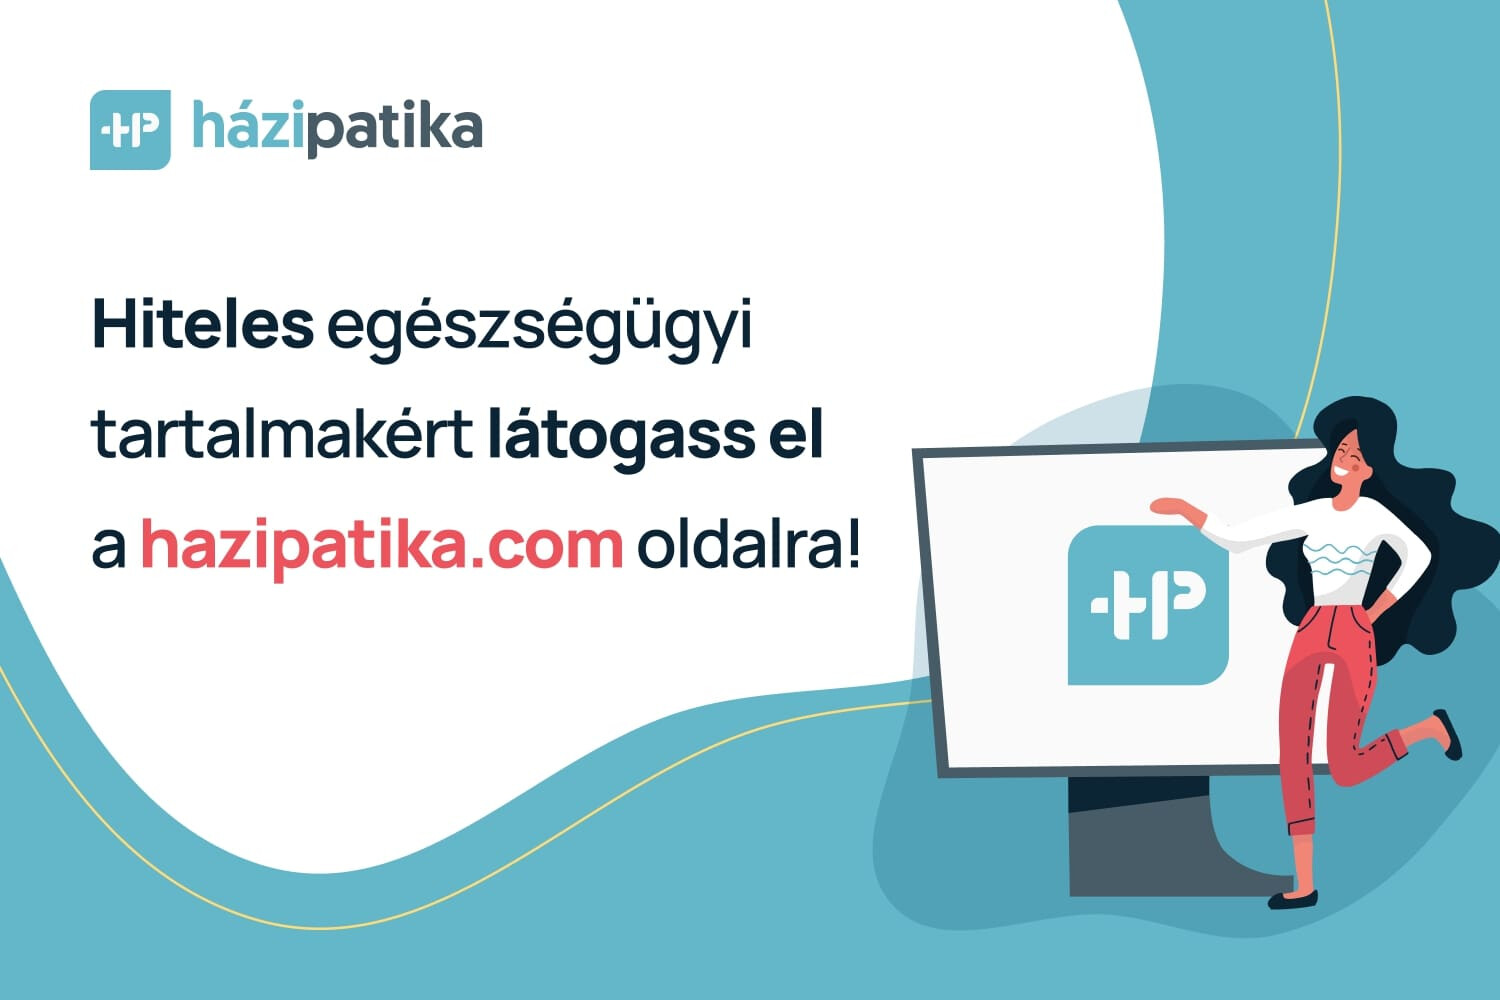 Magyar Hypertonia Társaság On-line